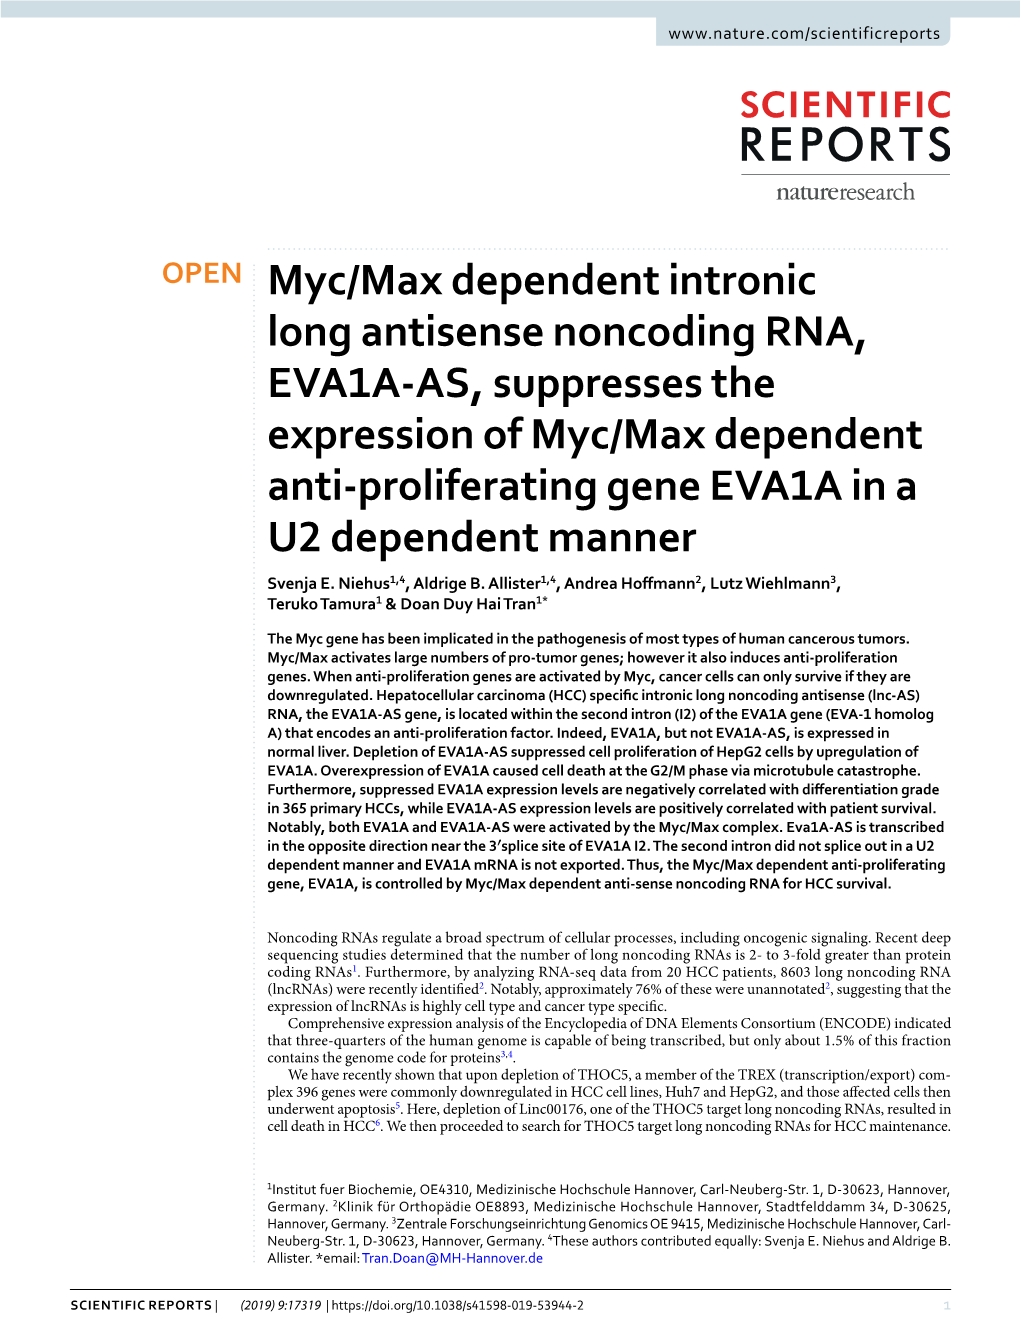 Myc/Max Dependent Intronic Long Antisense Noncoding RNA, EVA1A-AS, Suppresses the Expression of Myc/Max Dependent Anti-Prolifera